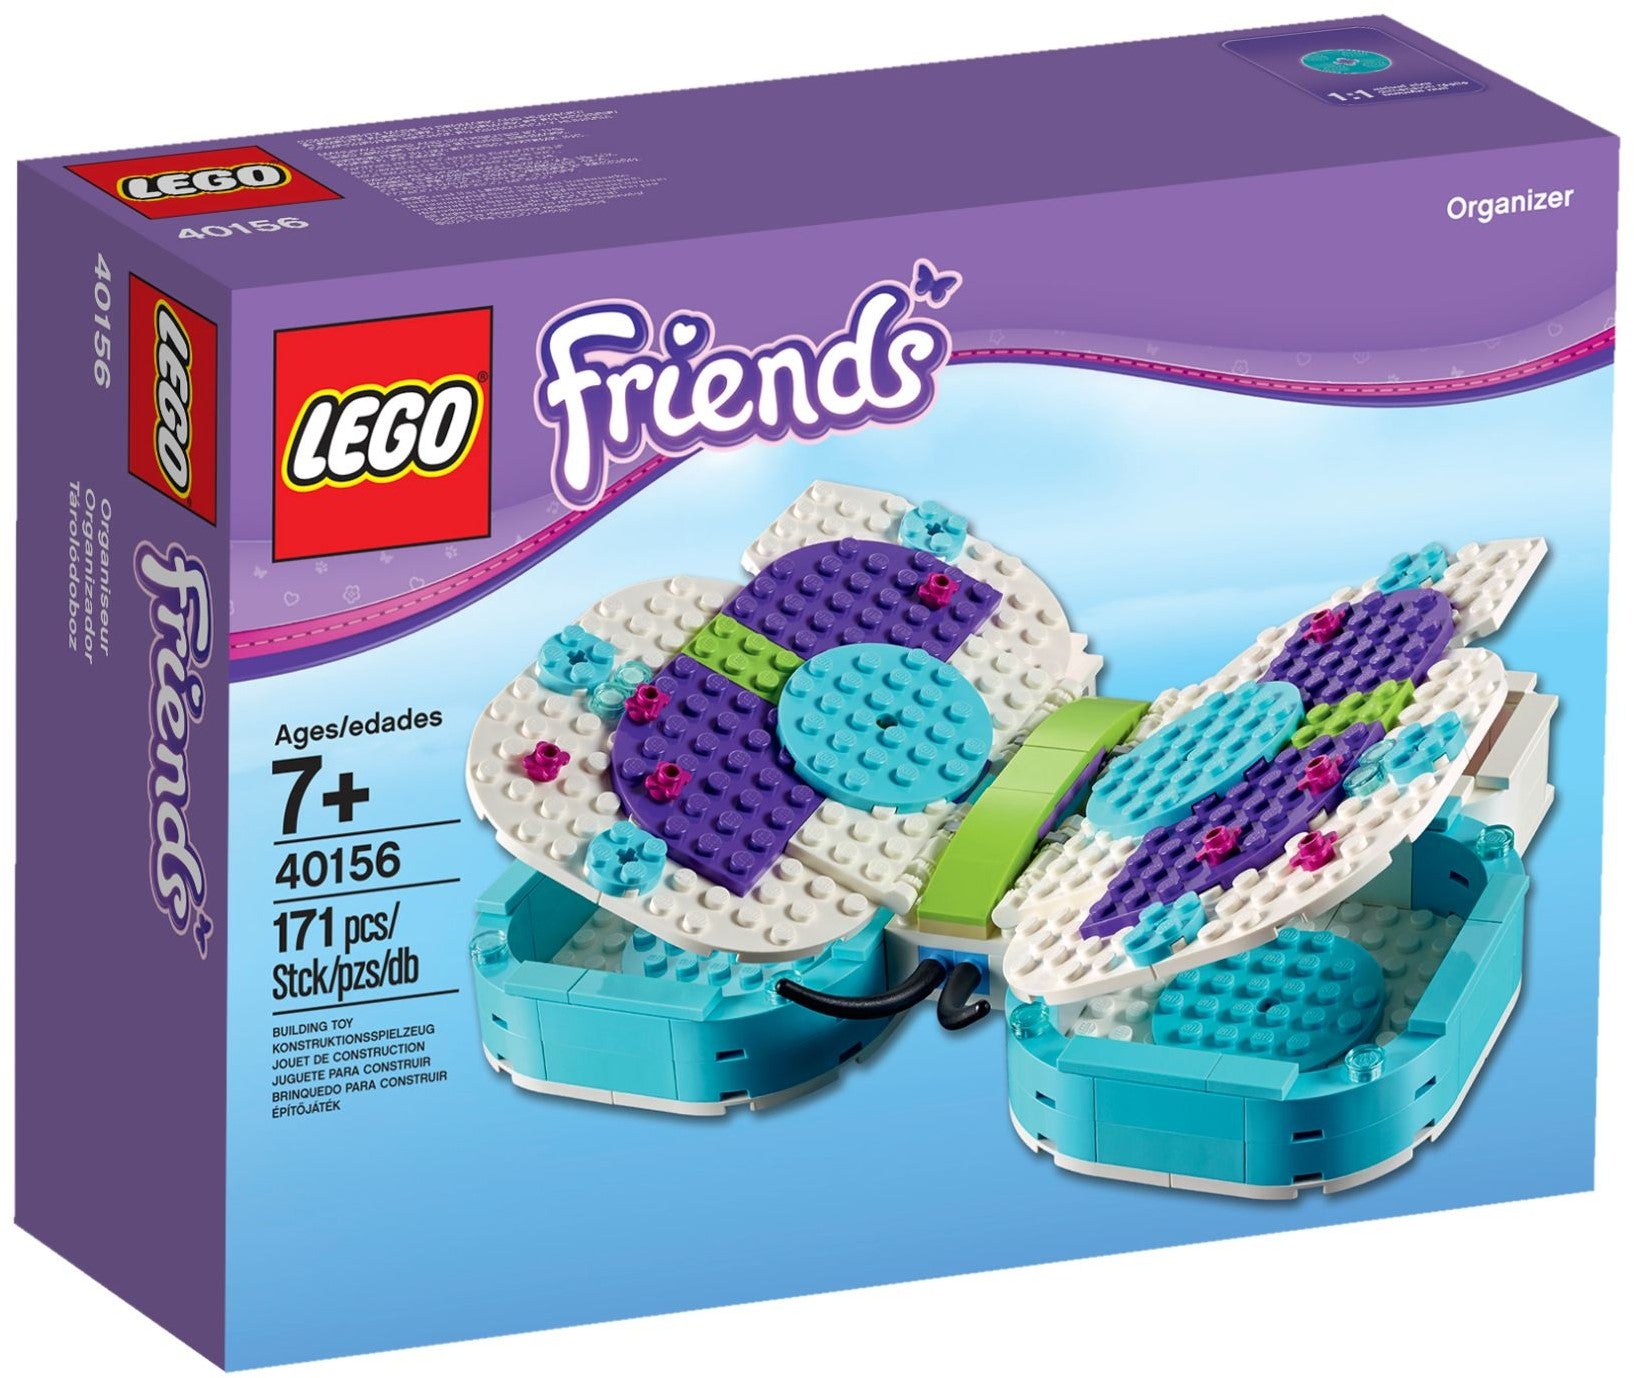 Lego Friends 40156 Butterfly Organizer